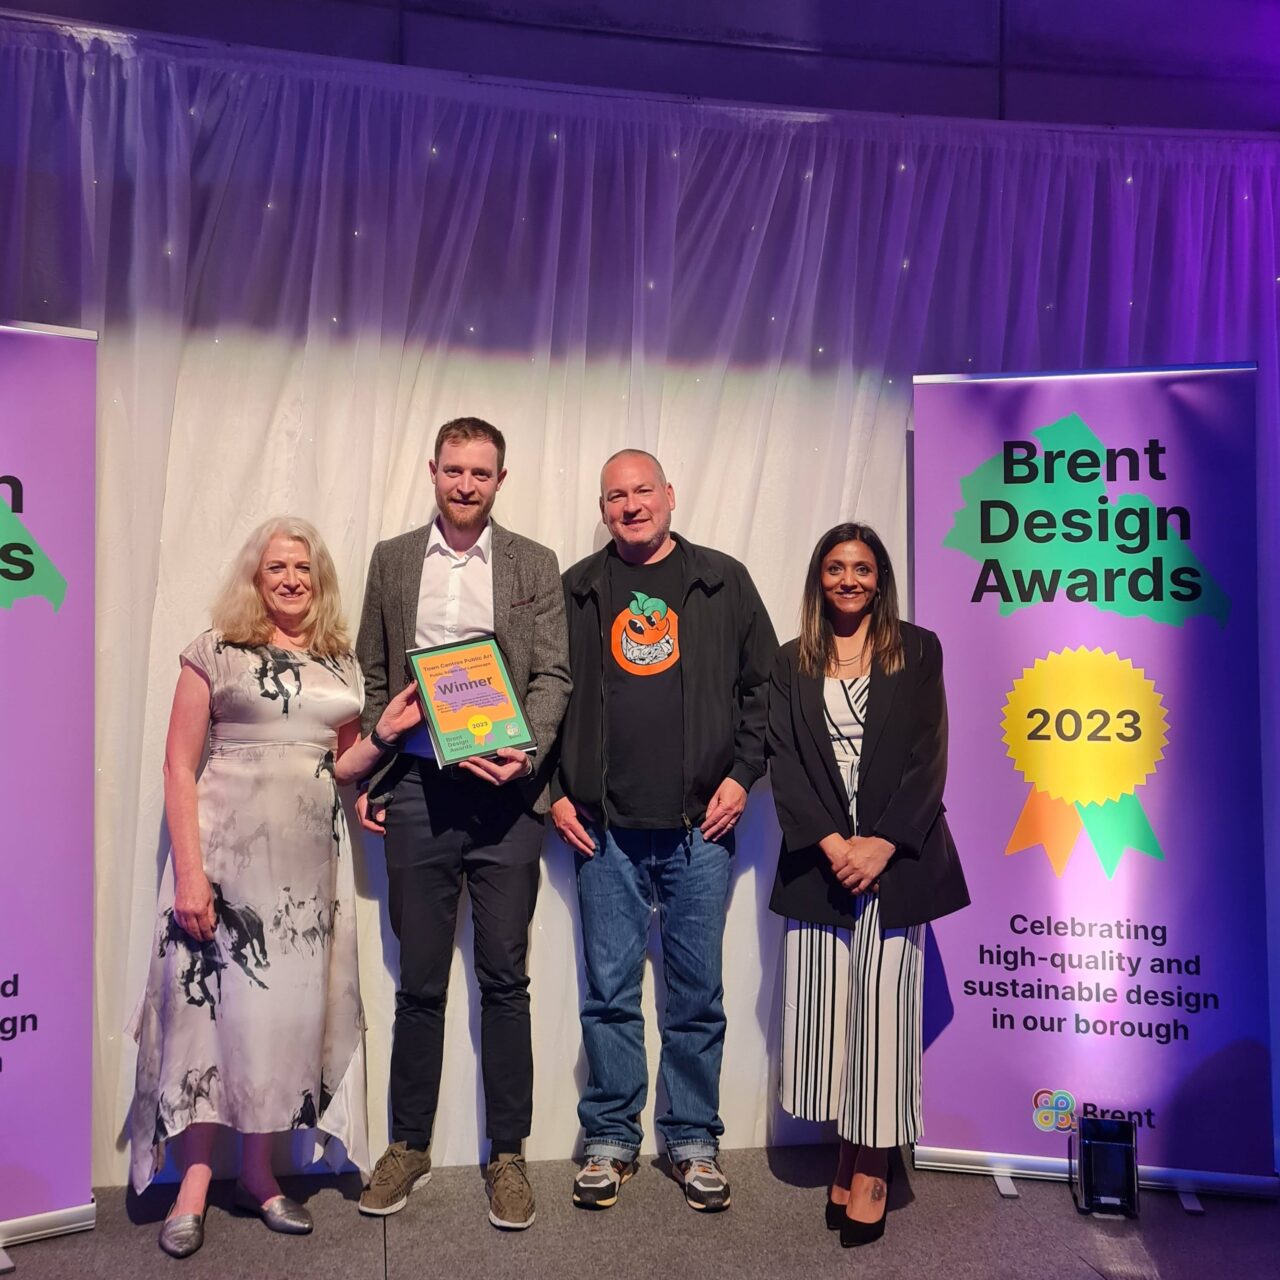 Winners of the Brent Design Awards